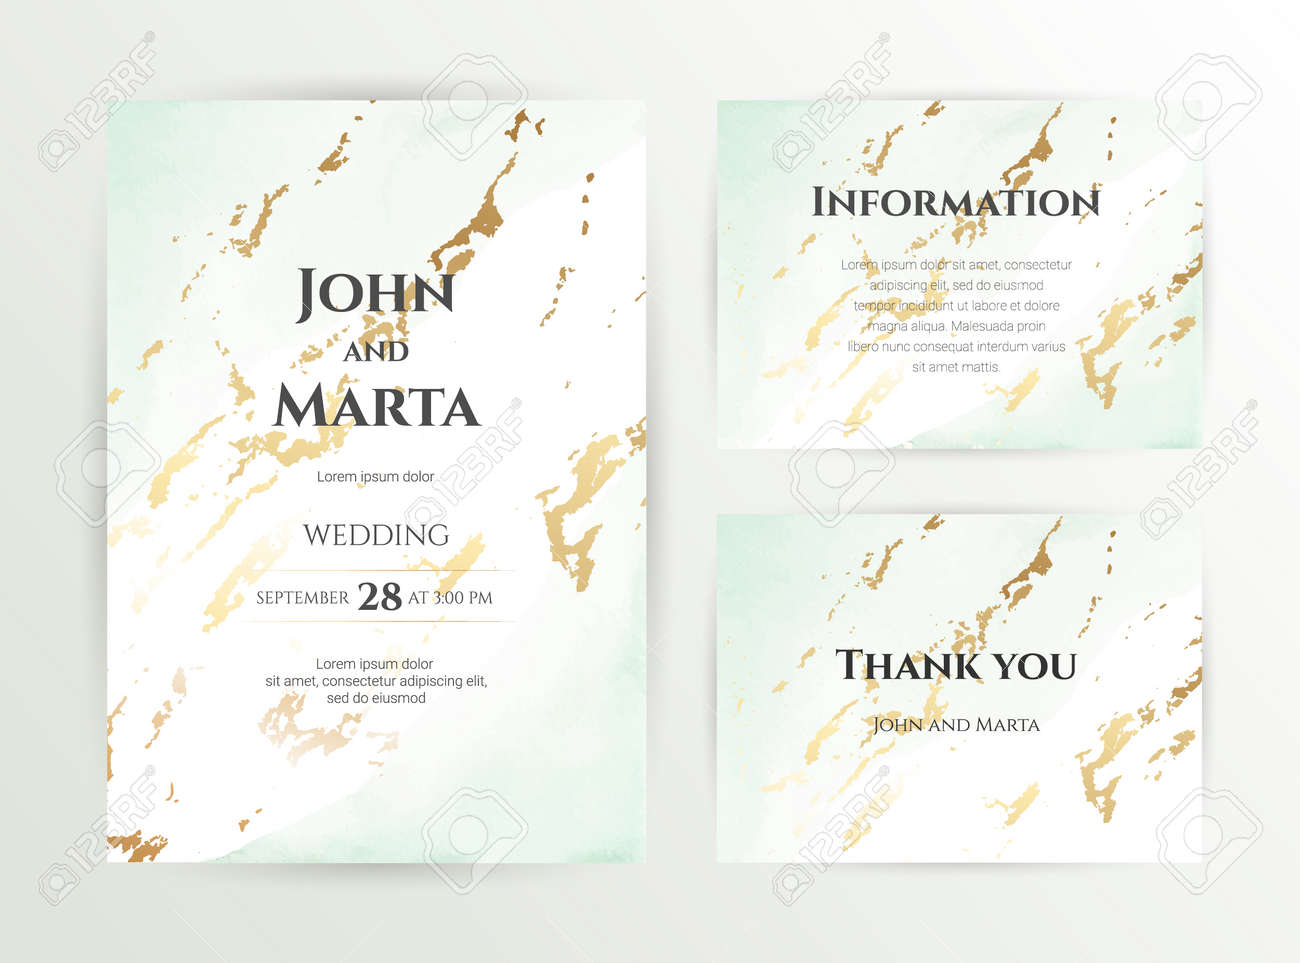 wedding invitation templates Inside Wedding Invitation Flyer Template